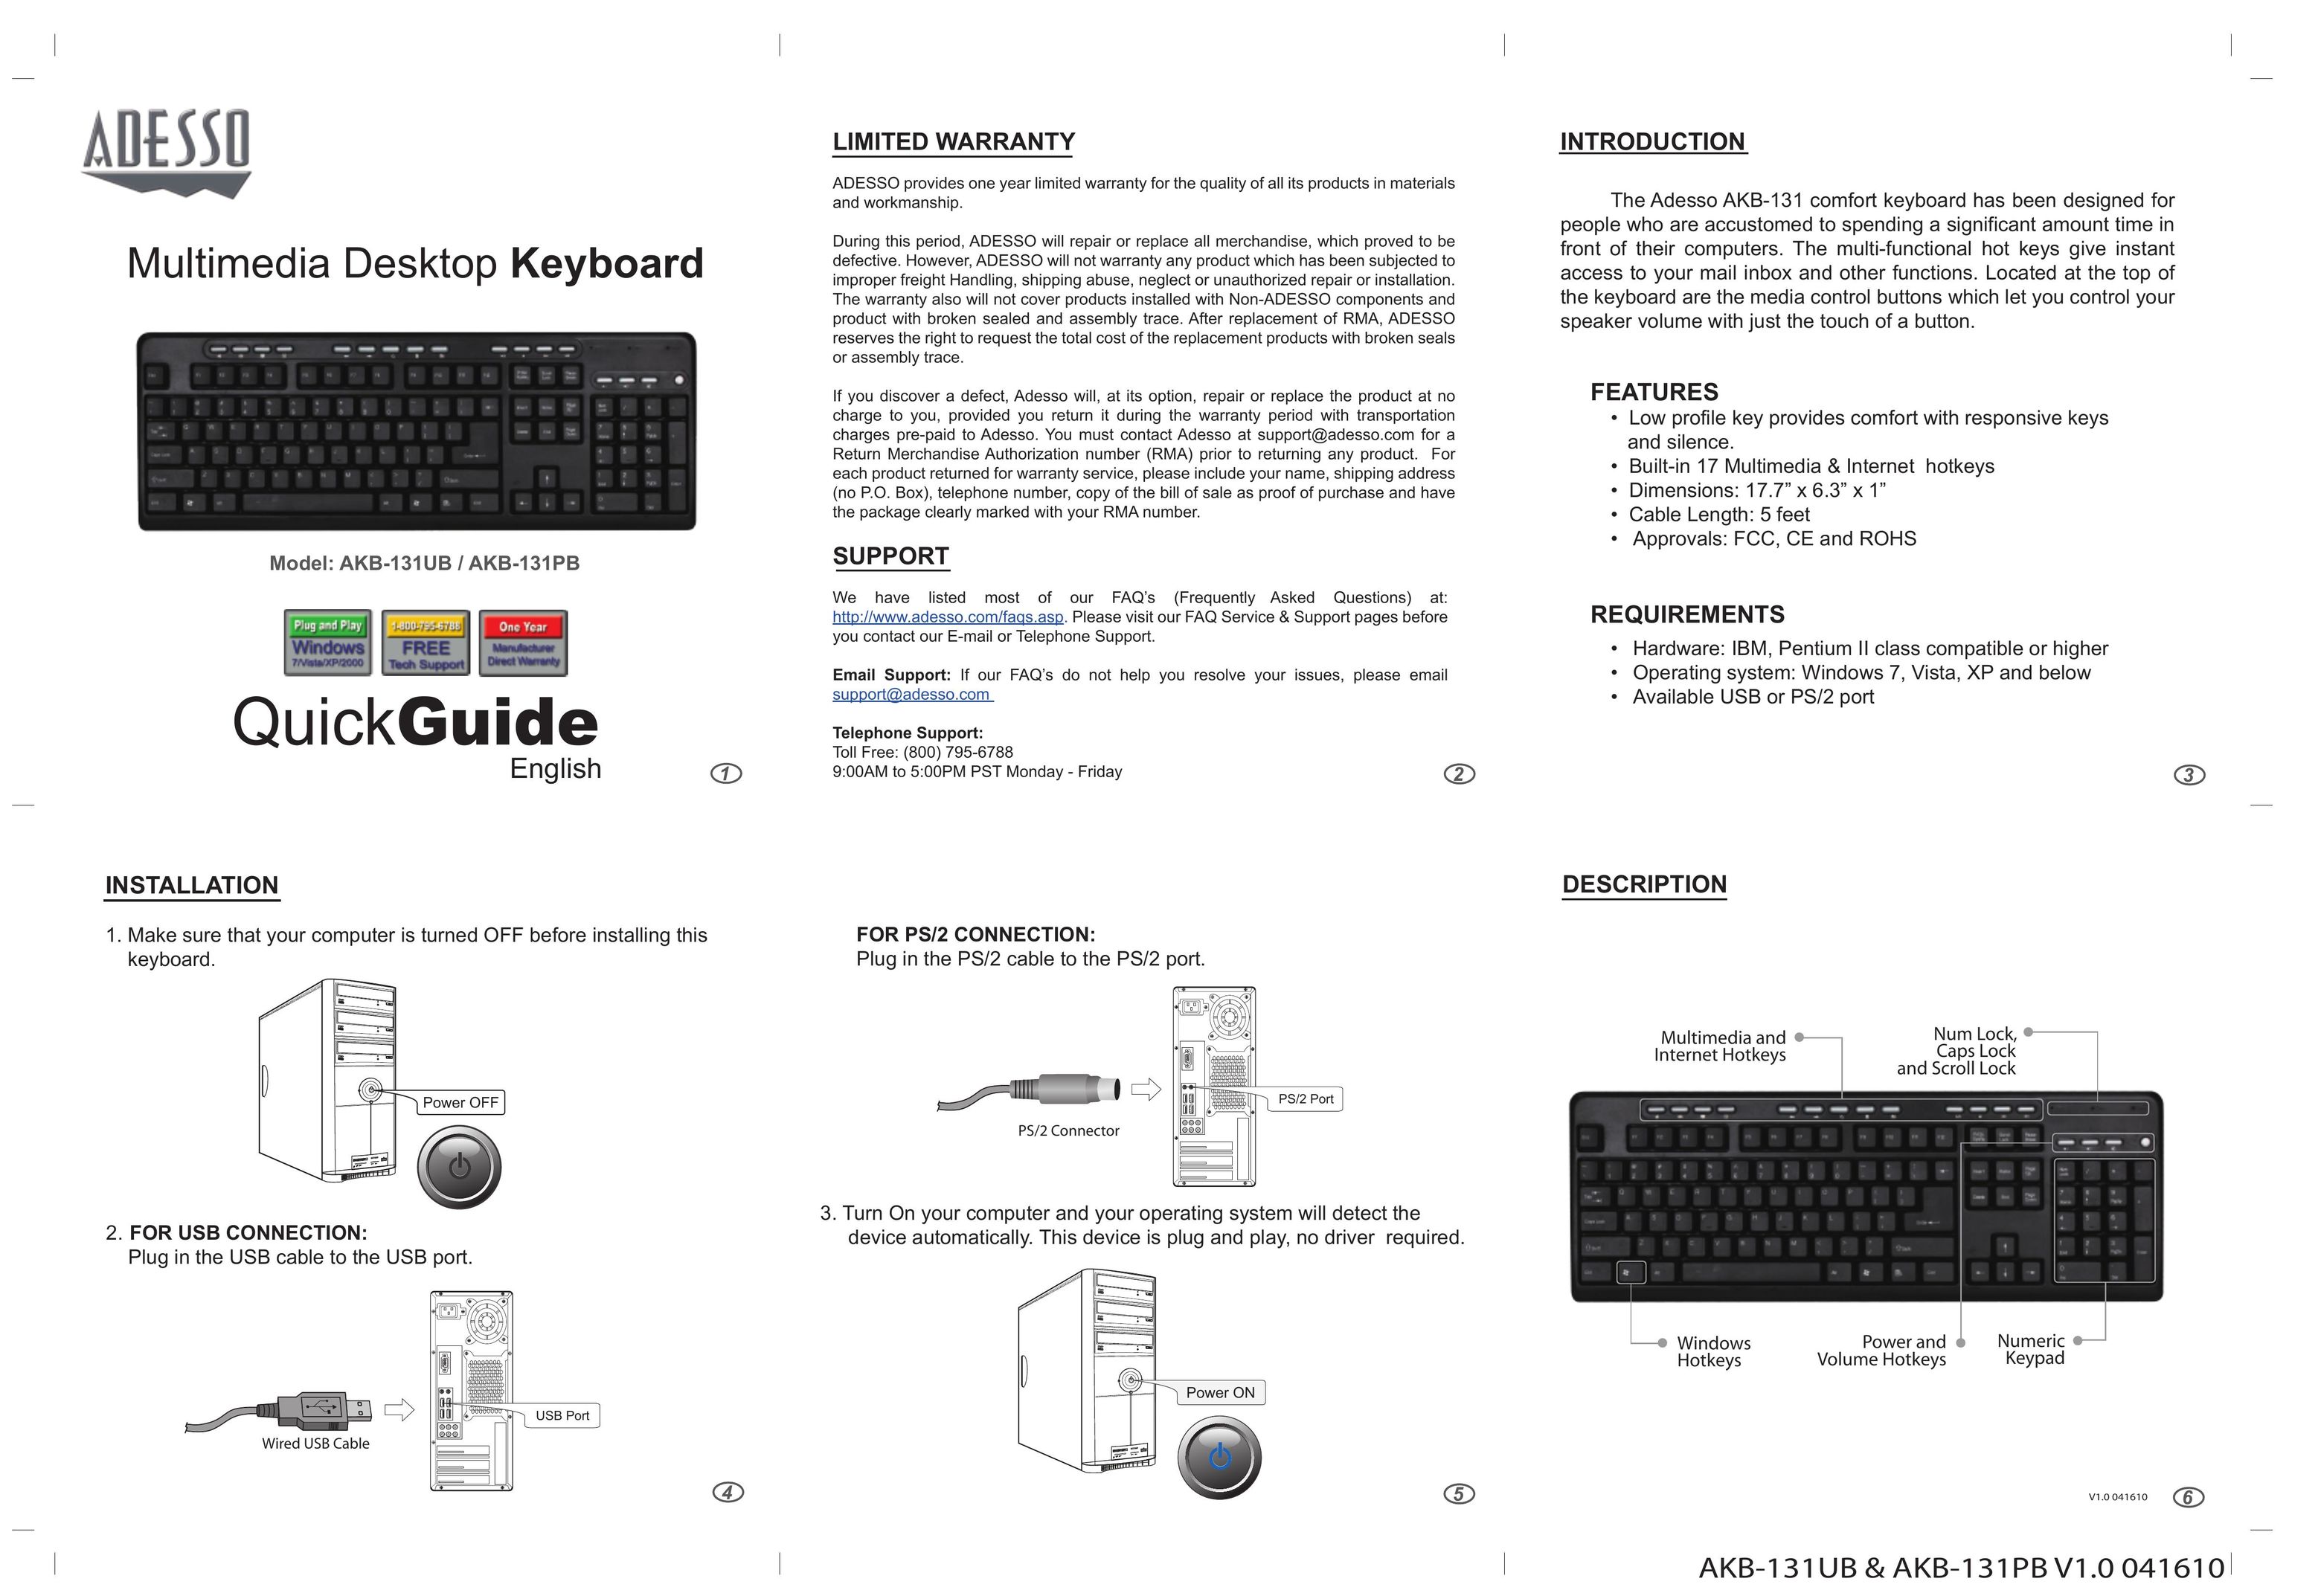 Adesso AKB-131UB Computer Keyboard User Manual